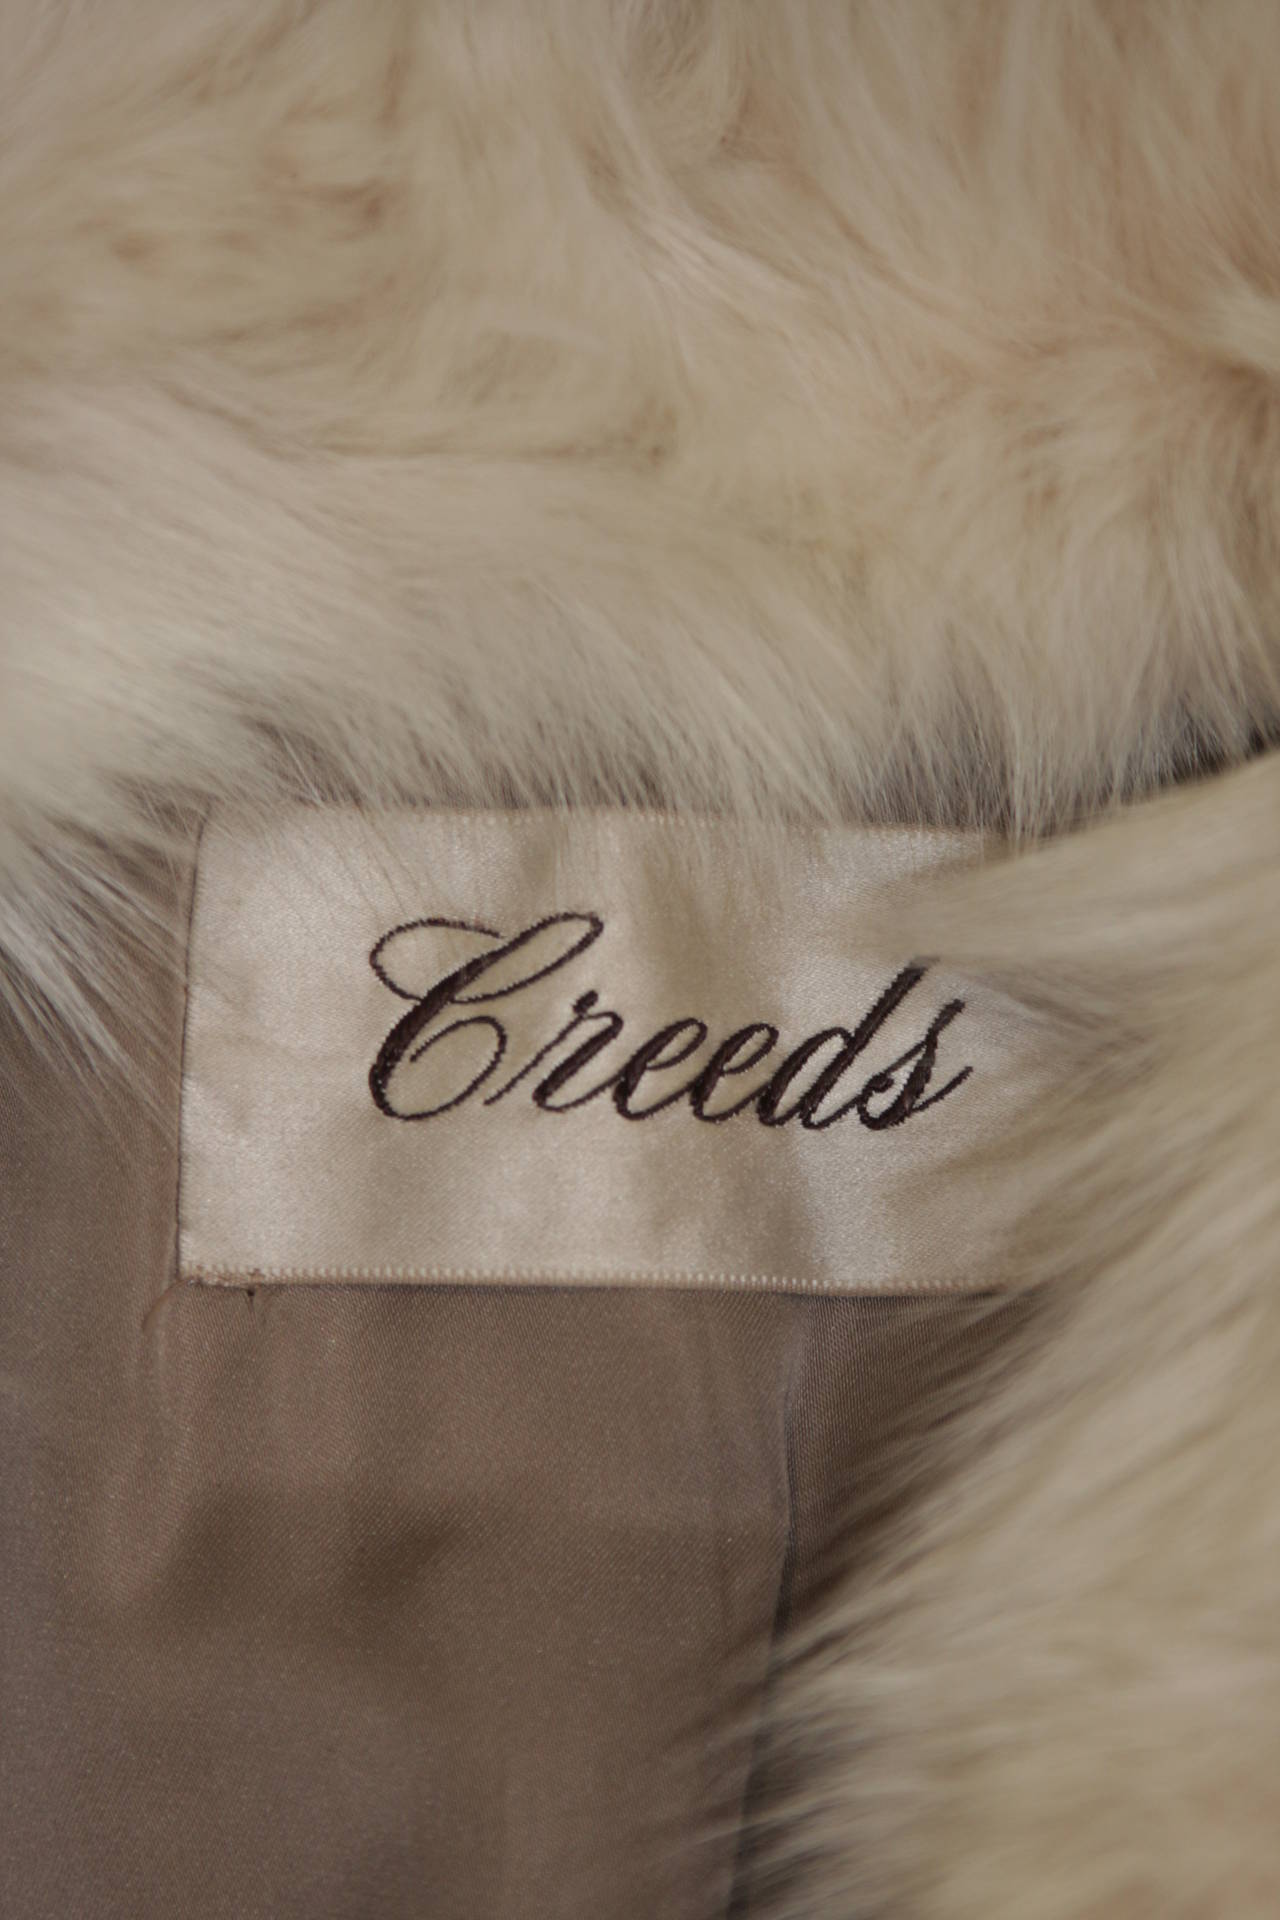 Creeds Toronto Lynx Coat with Fox Fur Collar and Sleeves 2